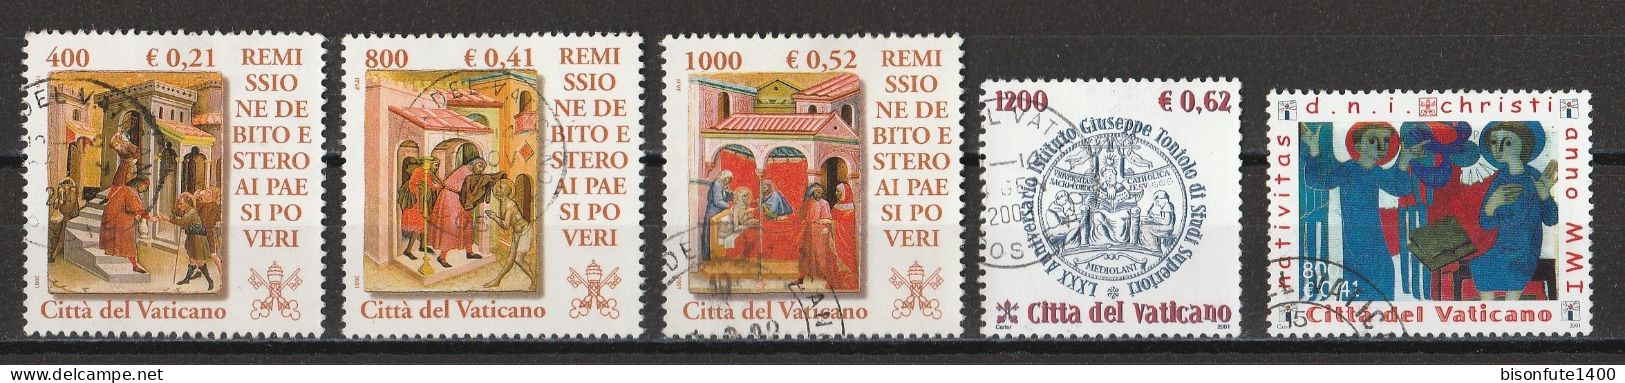 Vatican 2001 : Timbres Yvert & Tellier N° 1238 - 1239 - 1240 - 1246 - 1247 - 1248 Et 1249 Oblitérés. - Gebraucht